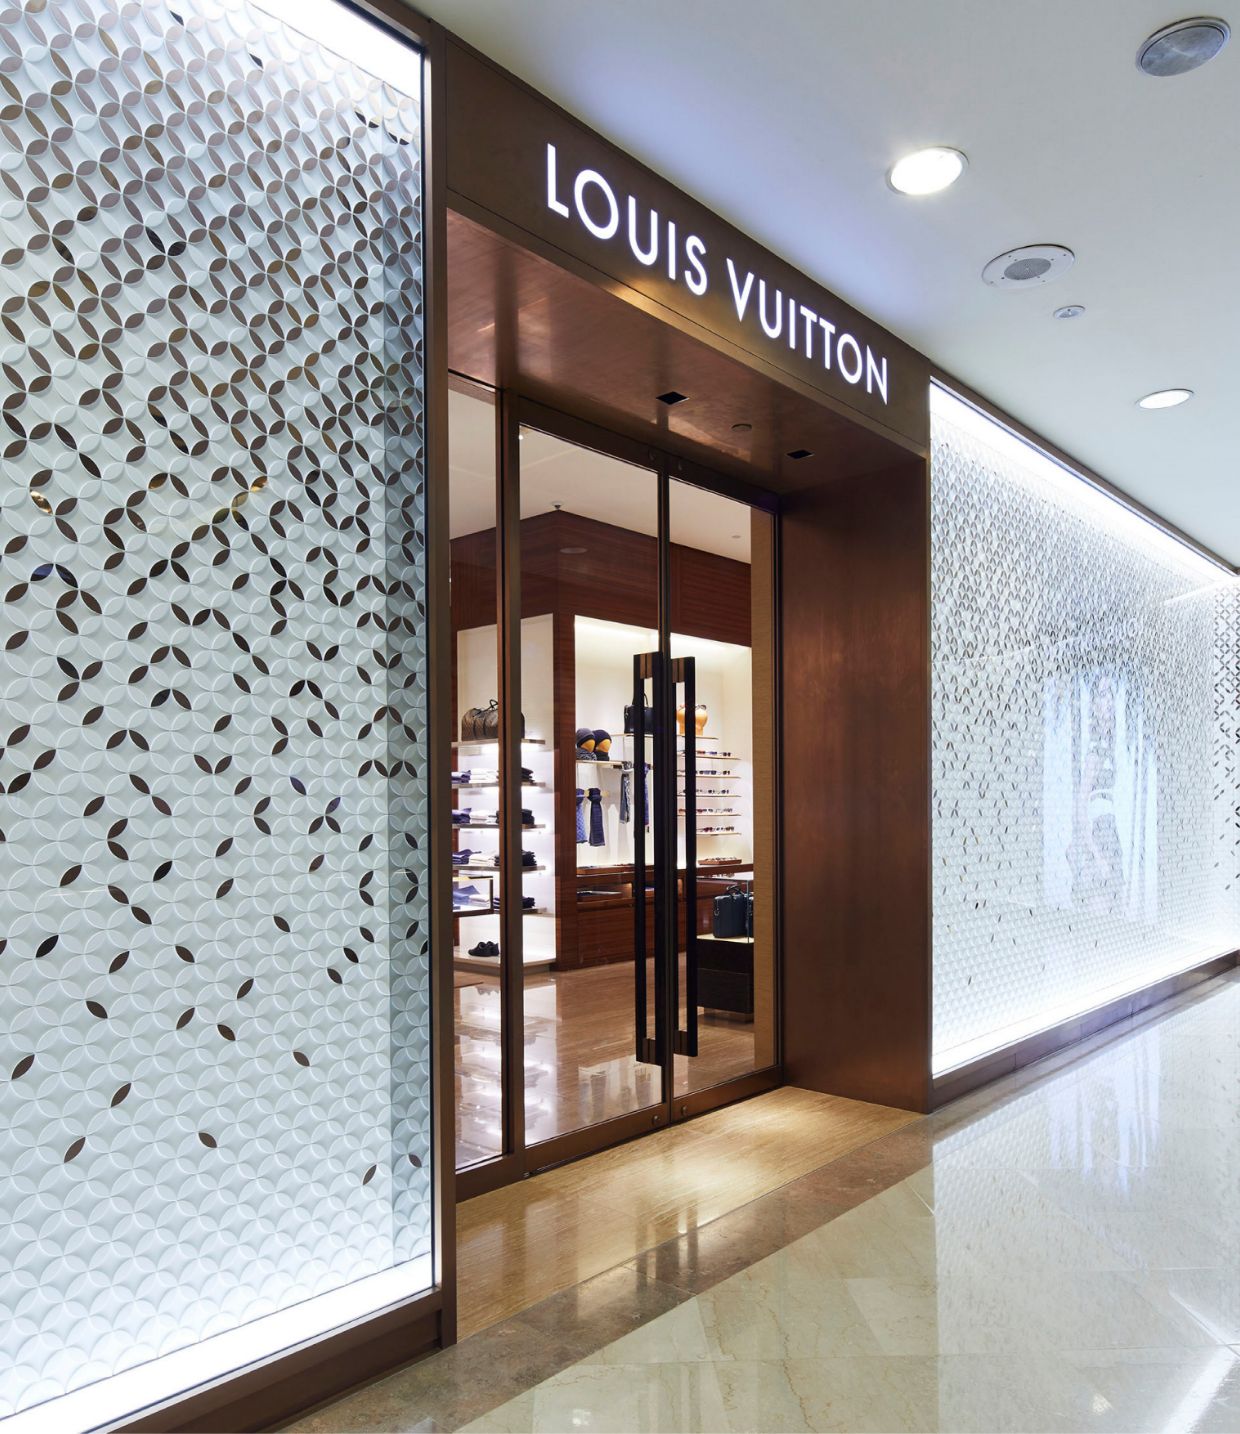 Louis Vuitton Taikoo Hui | MBM Facades